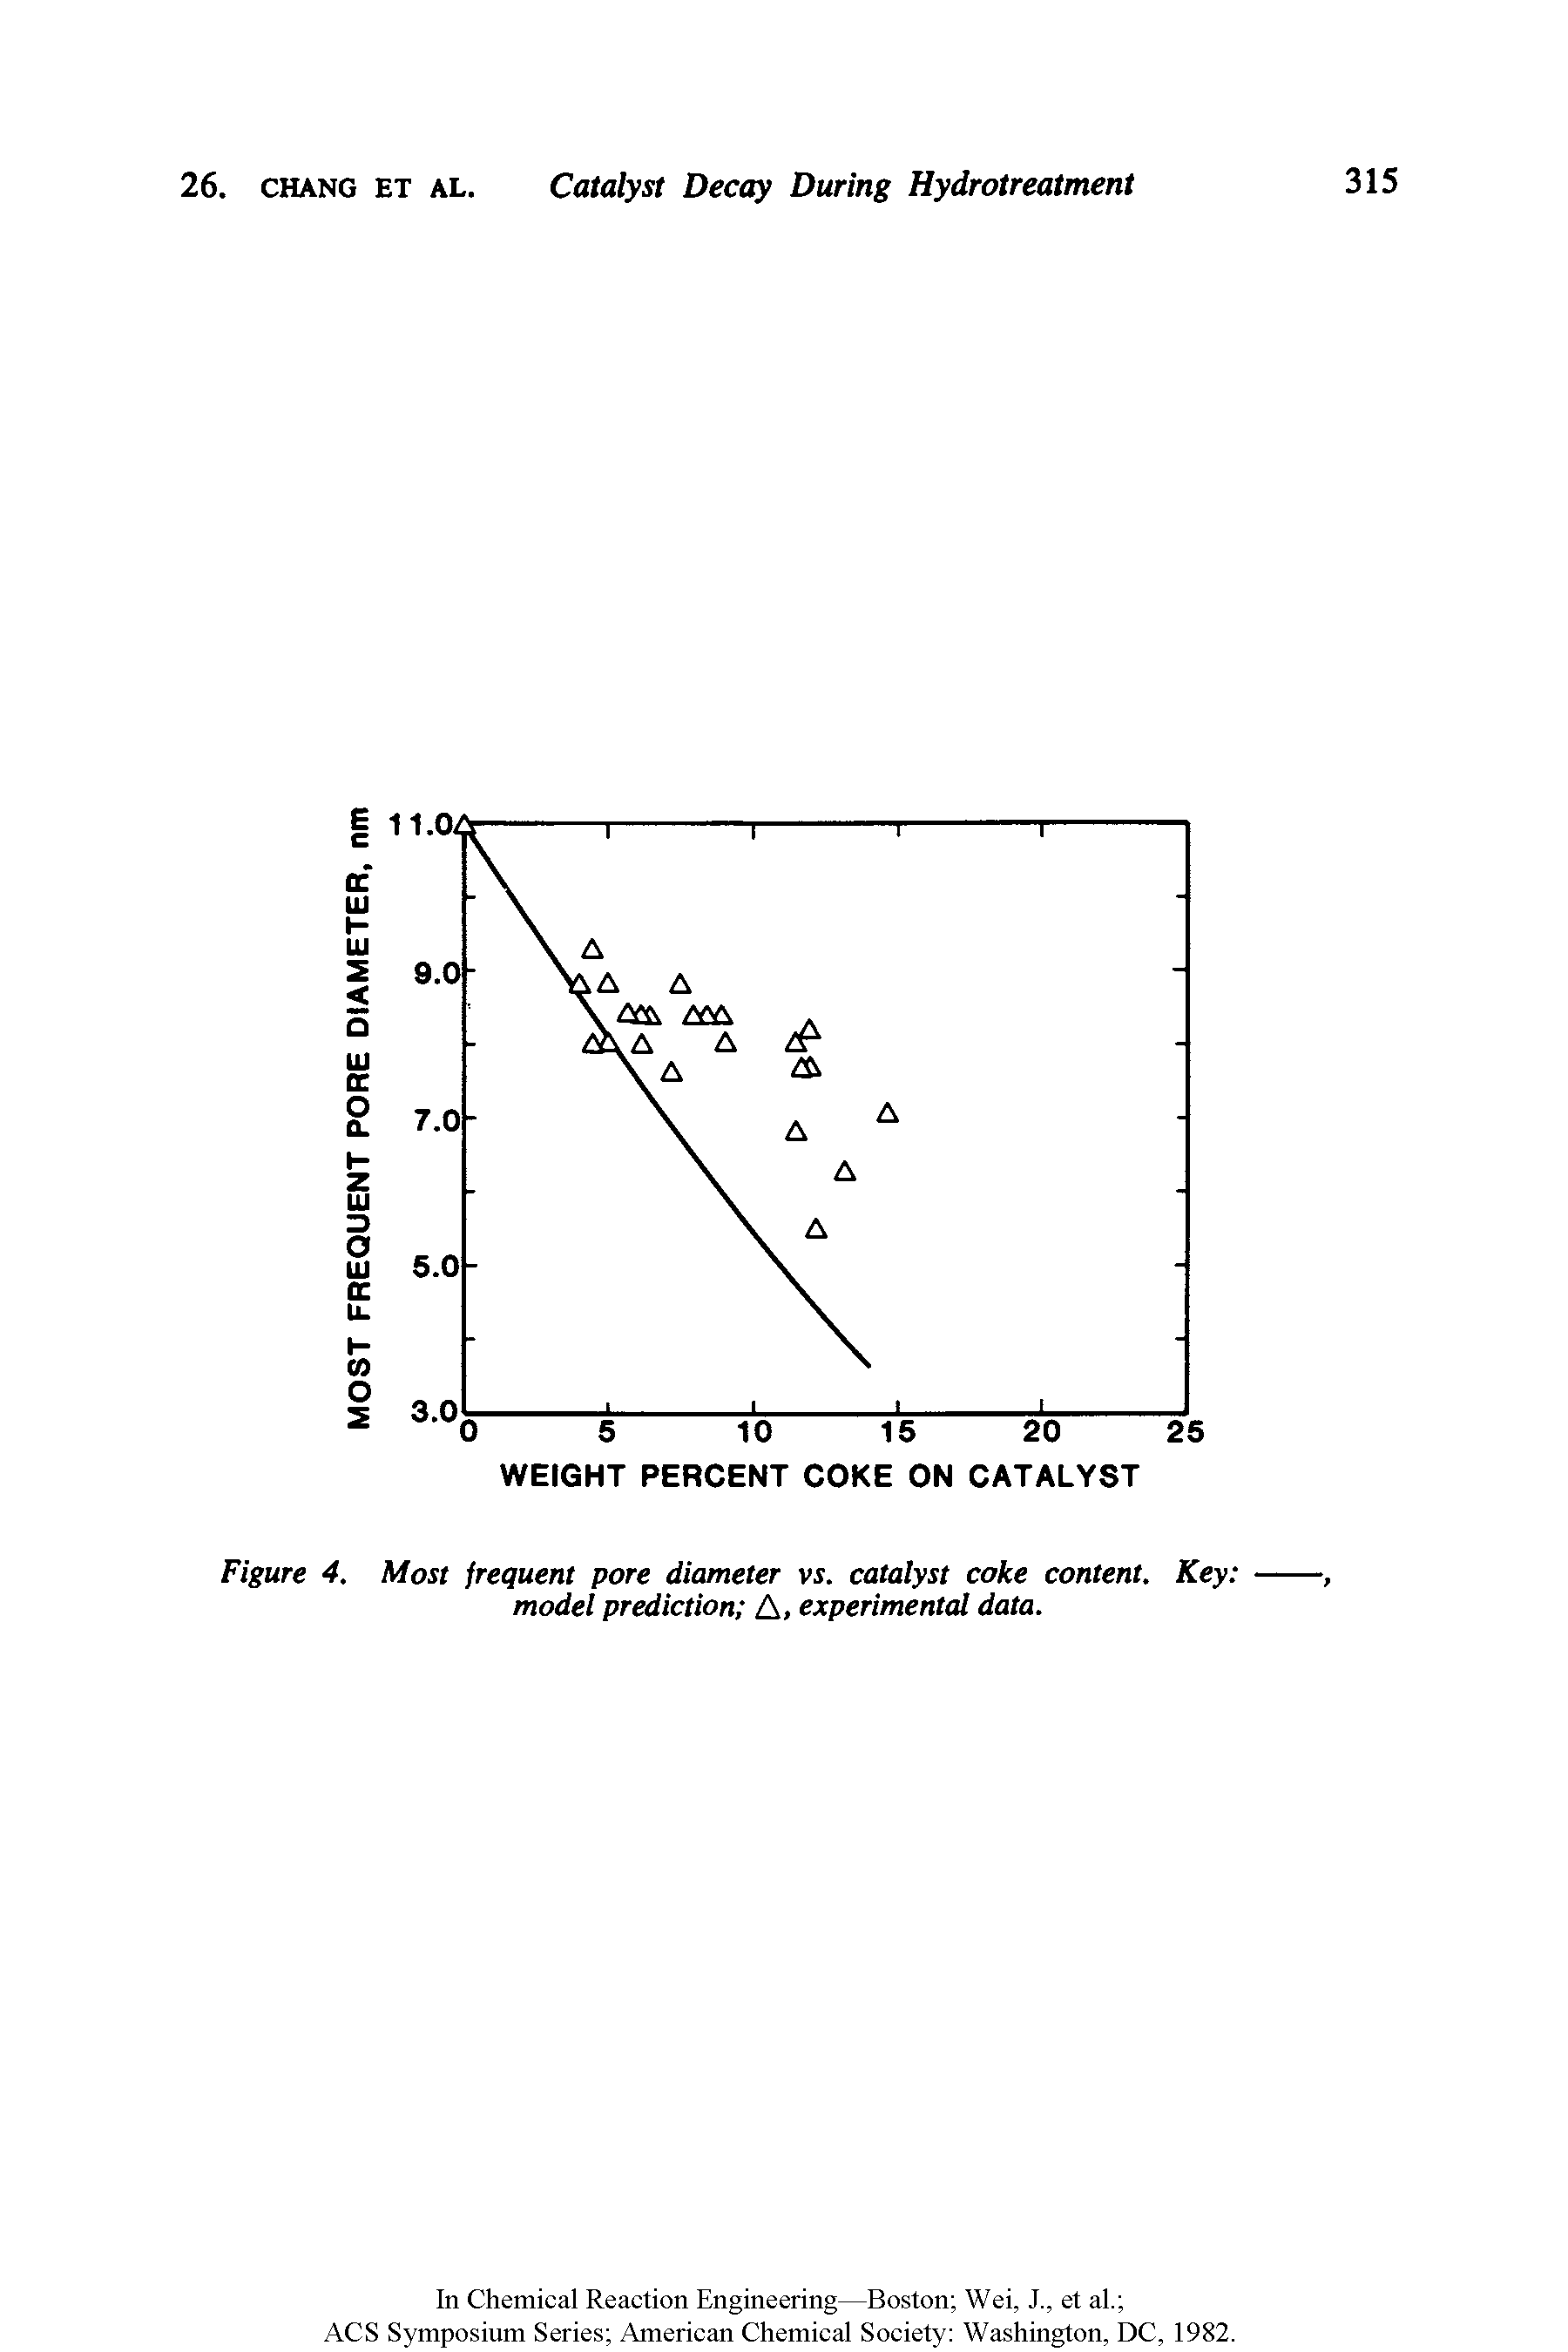 Figure 4. Most frequent pore diameter vs. catalyst coke content. Key model prediction A, experimental data.